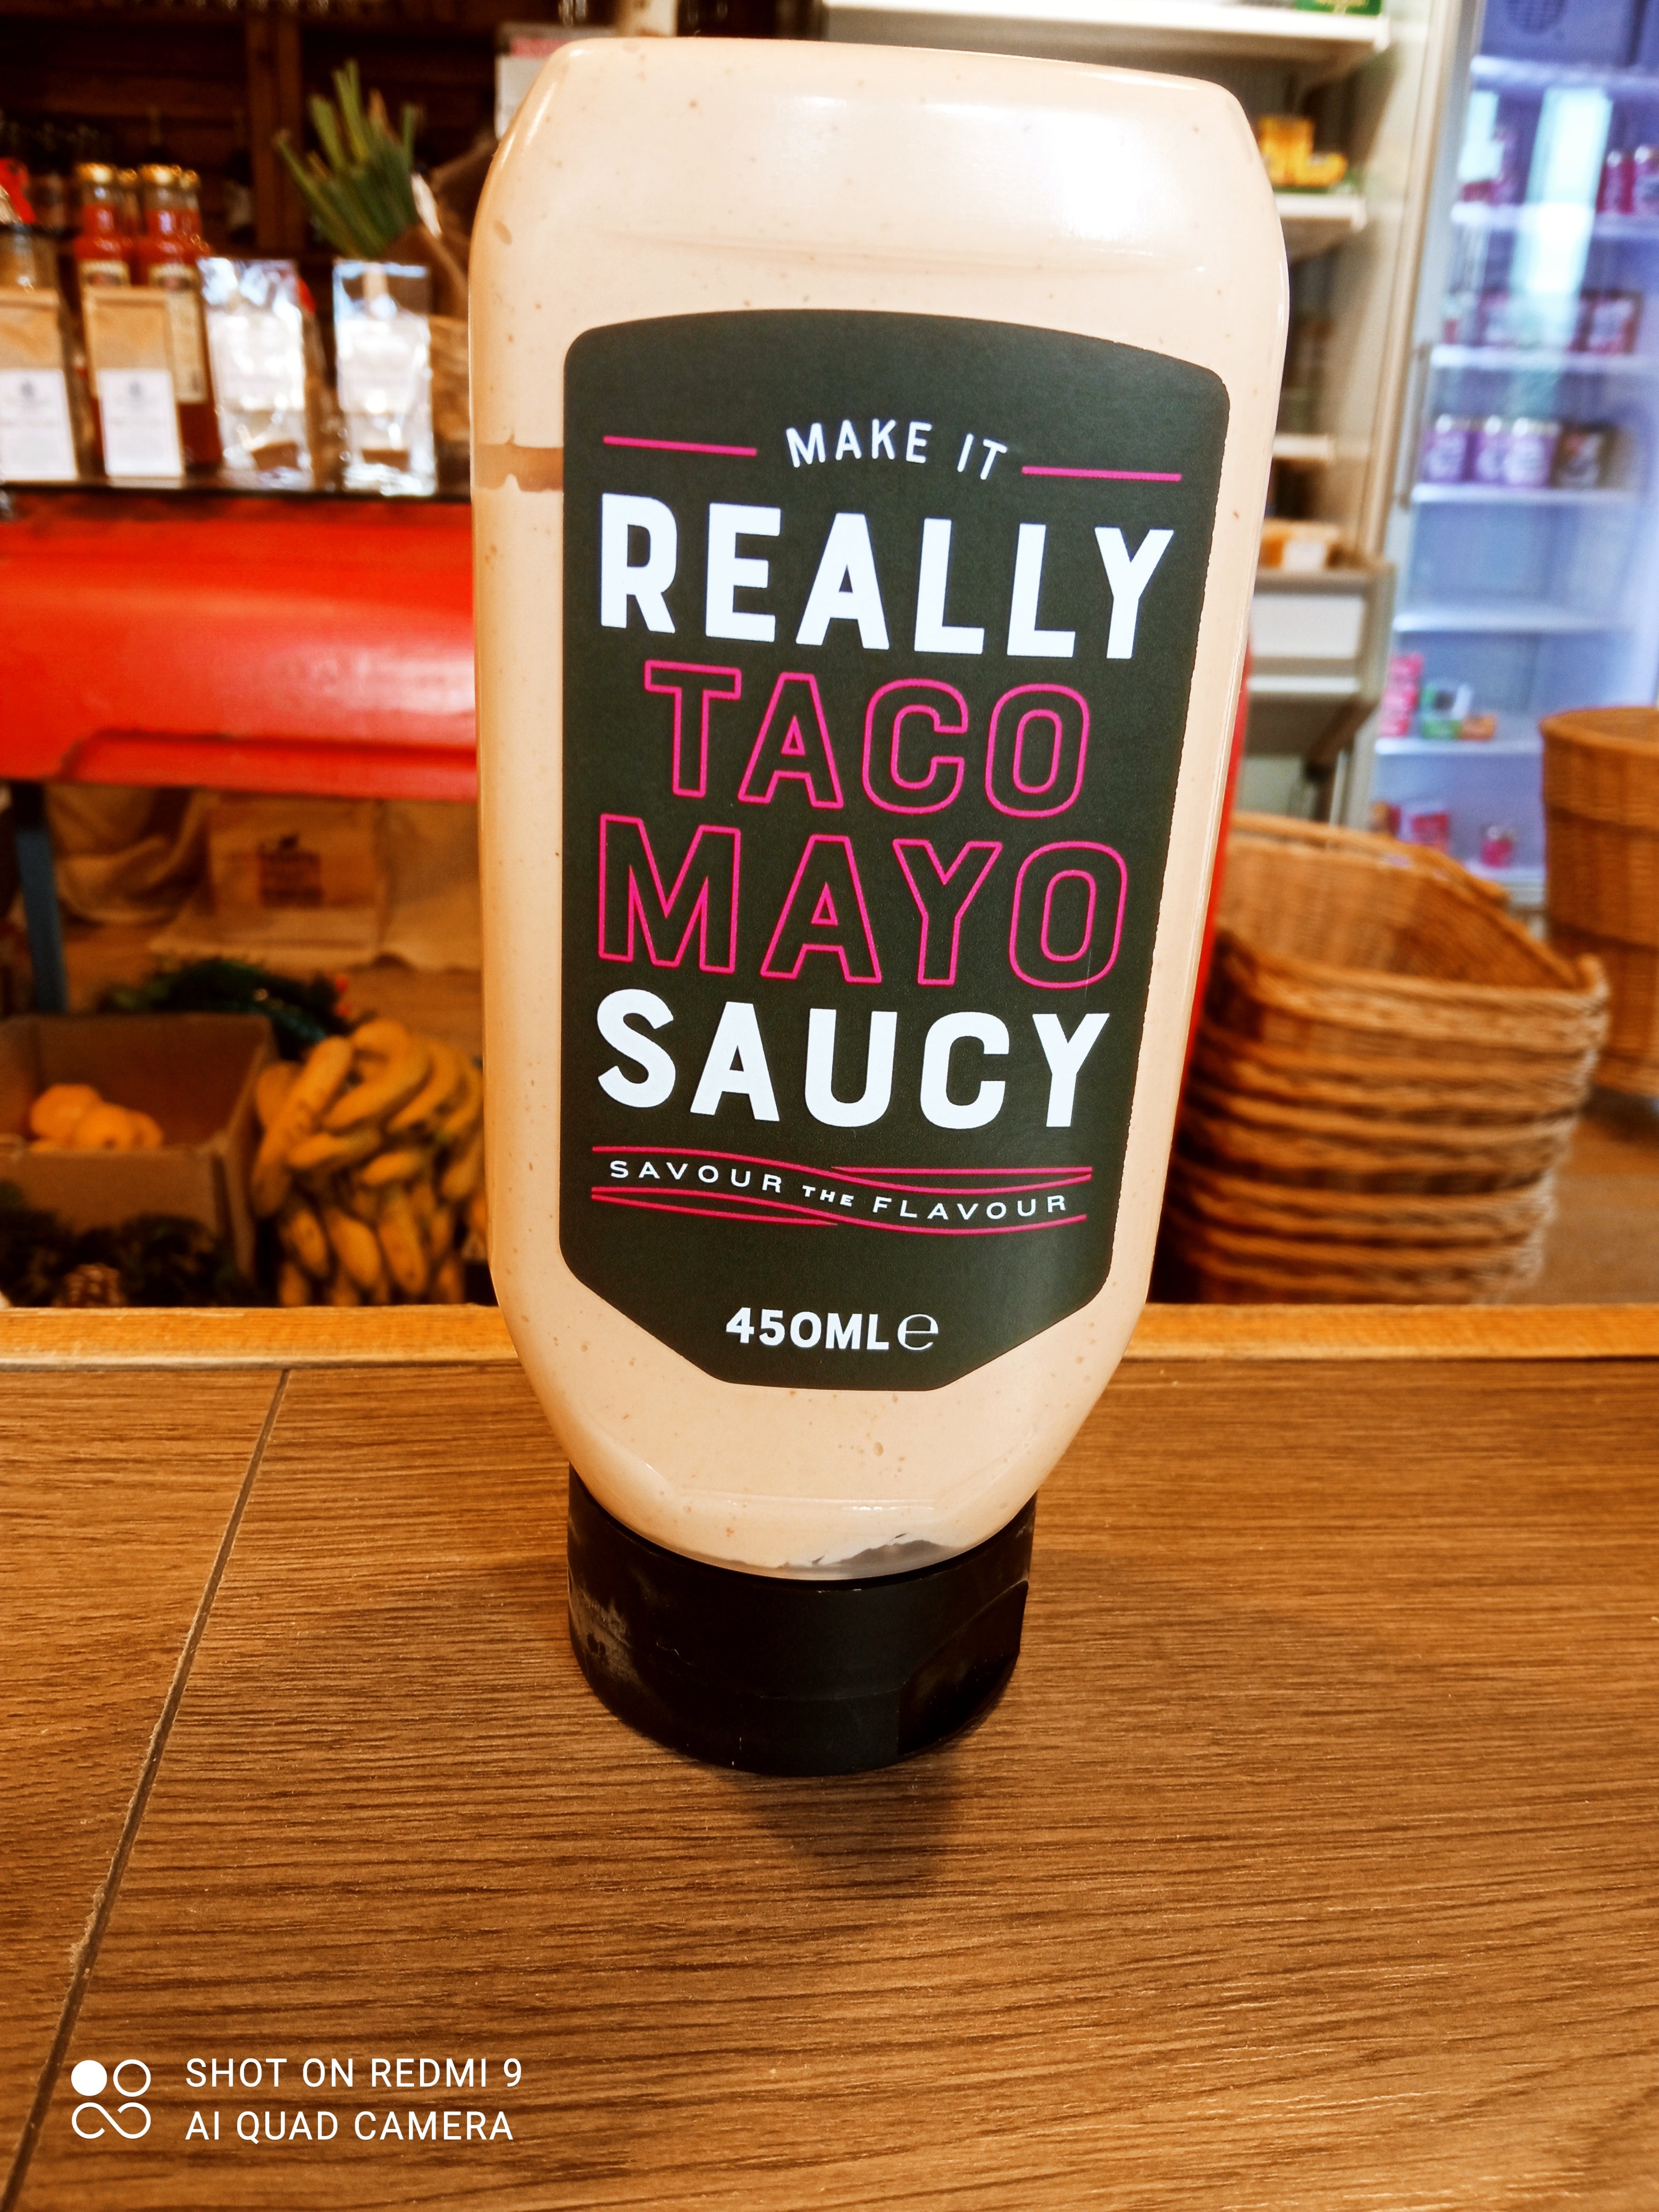 Make It Really Sauce Range